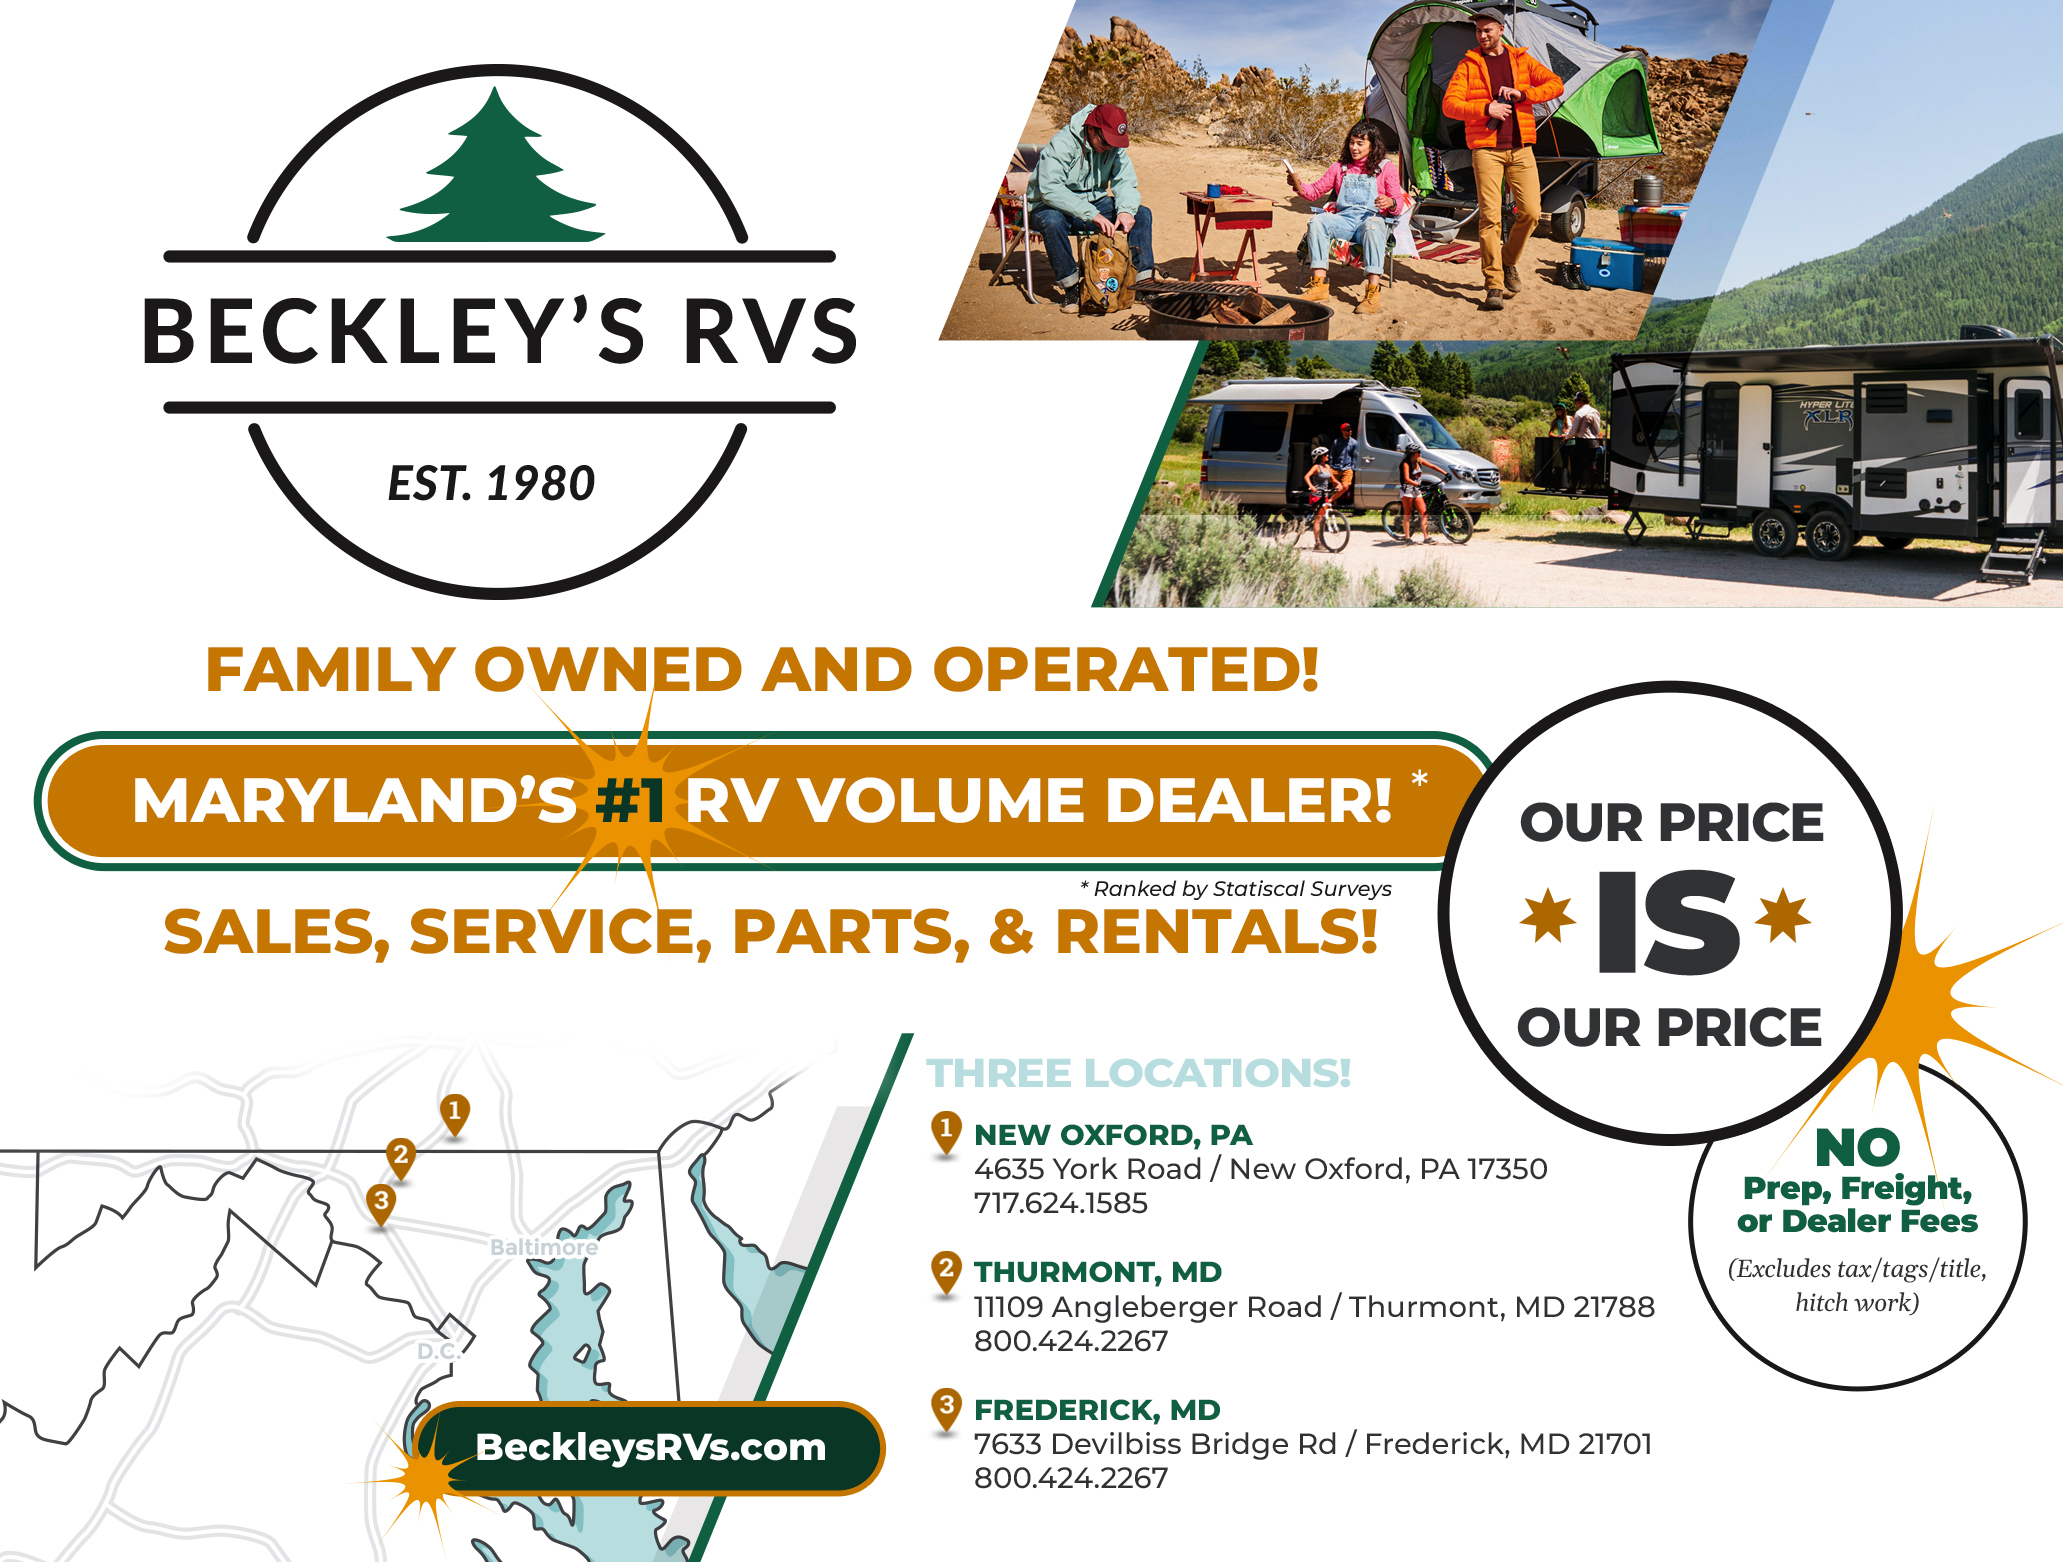 Beckley's RVs